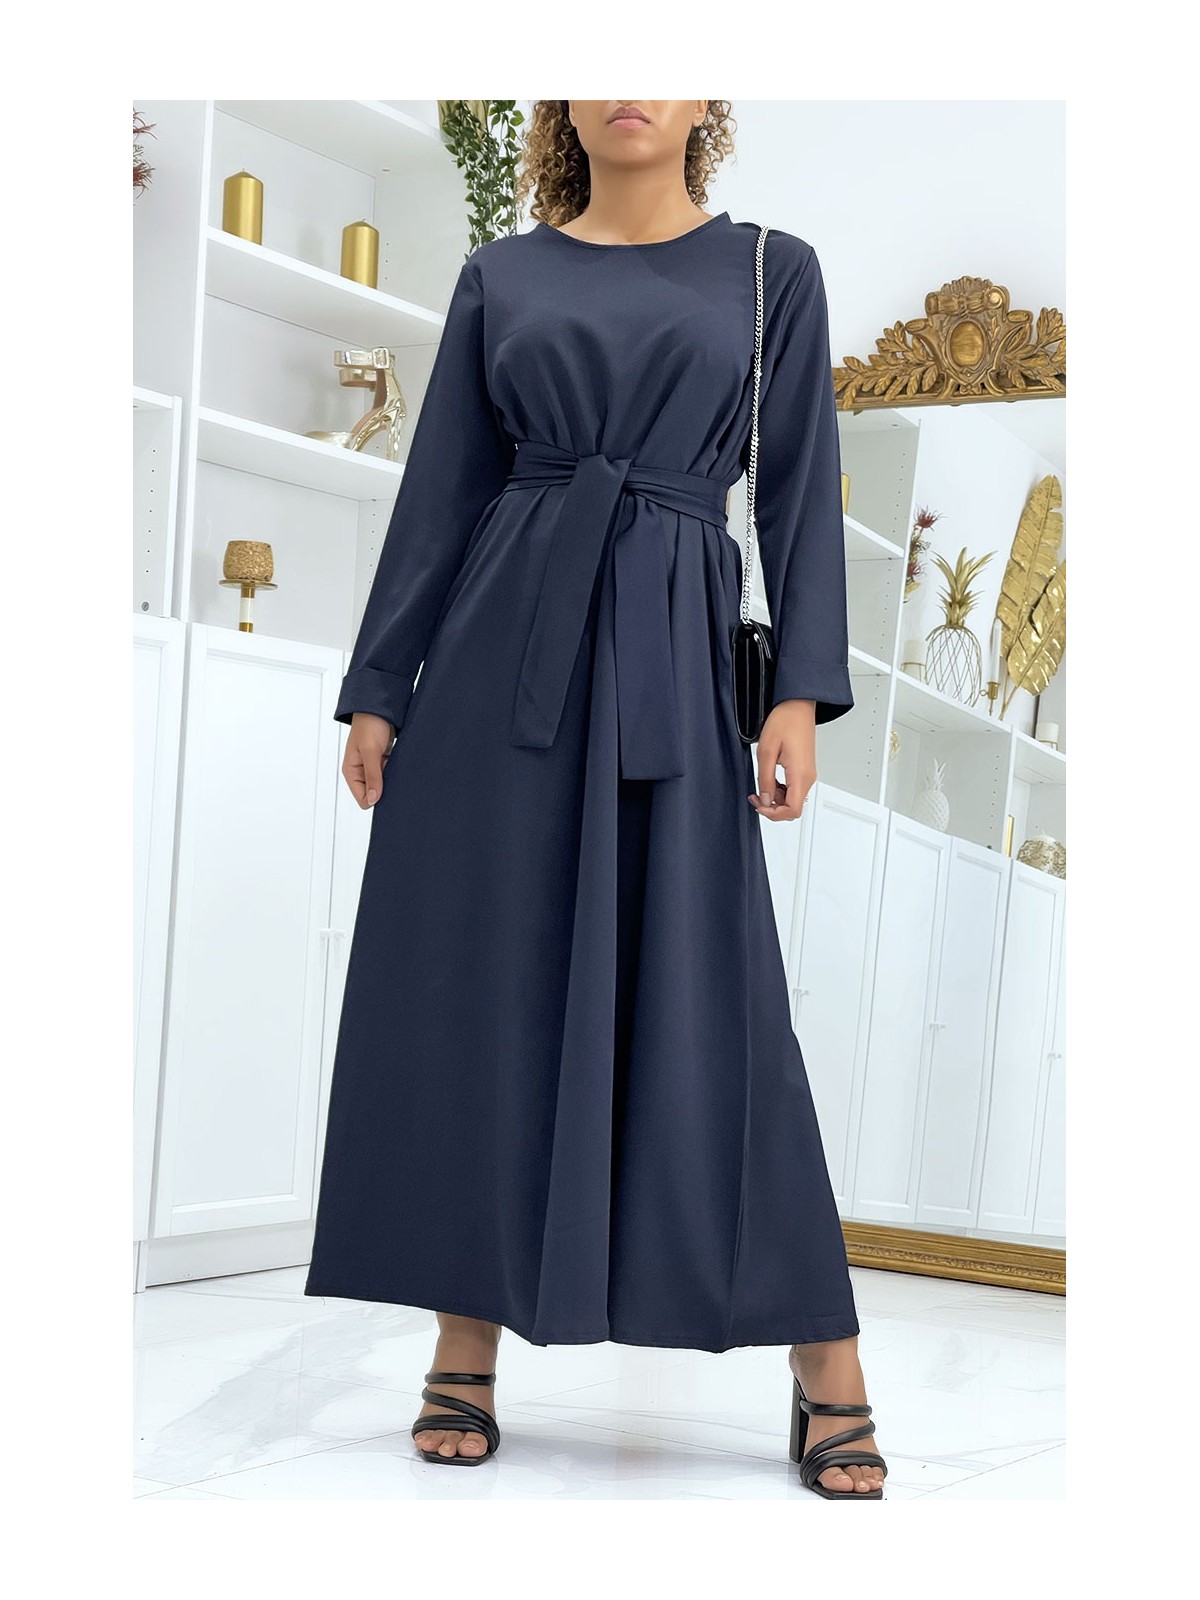 Longue abaya marine avec poches et ceinture - 4